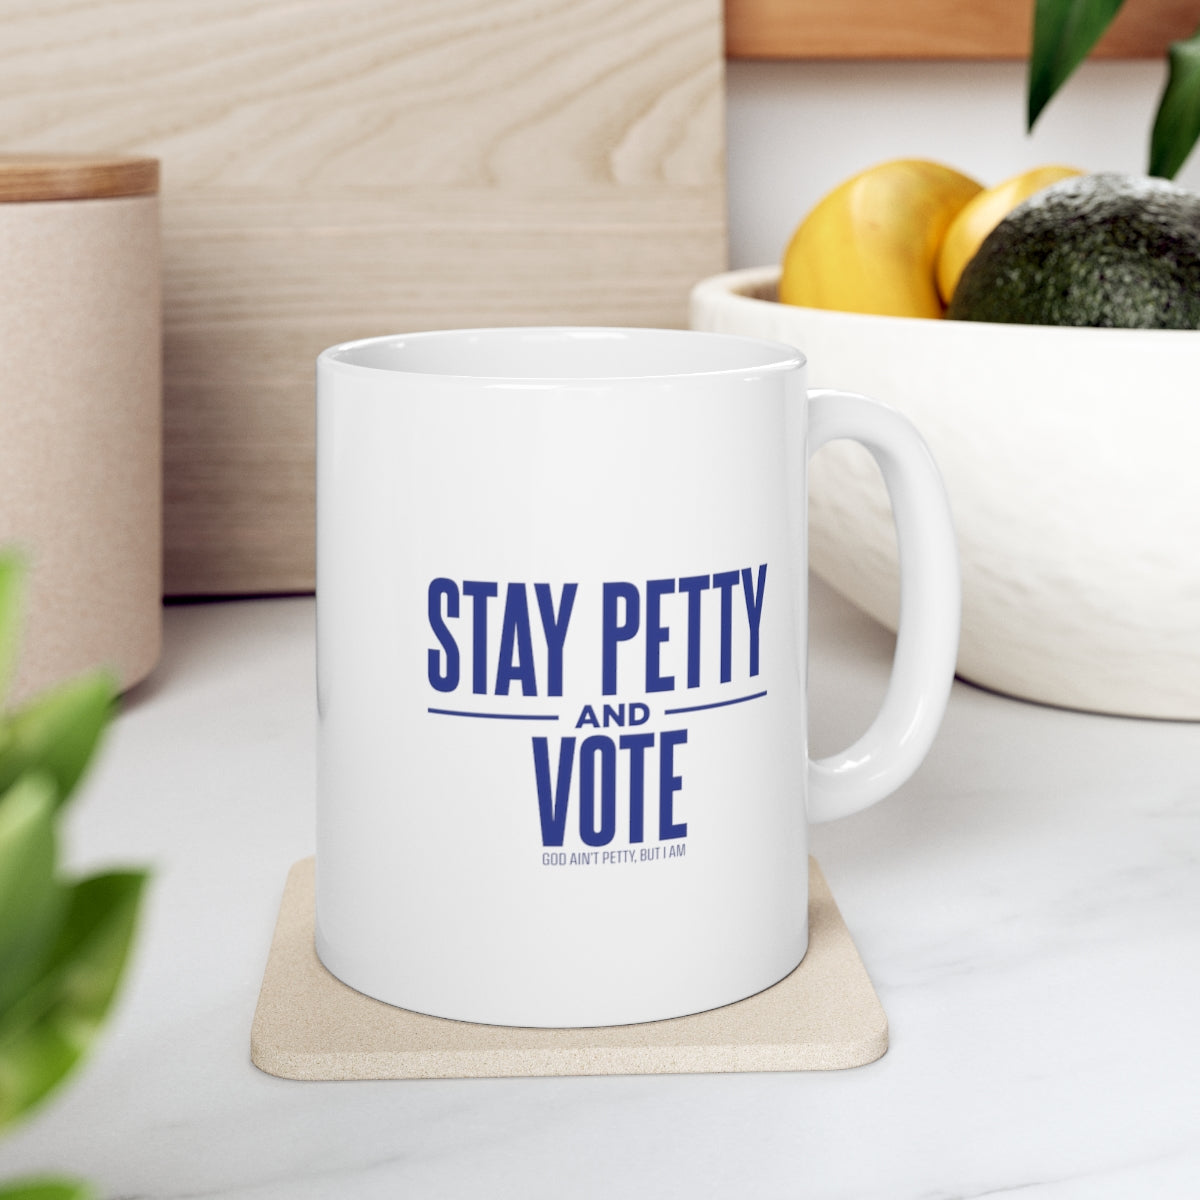 Stay Petty and Vote Mug 11oz (White/Blue)-Mug-The Original God Ain't Petty But I Am